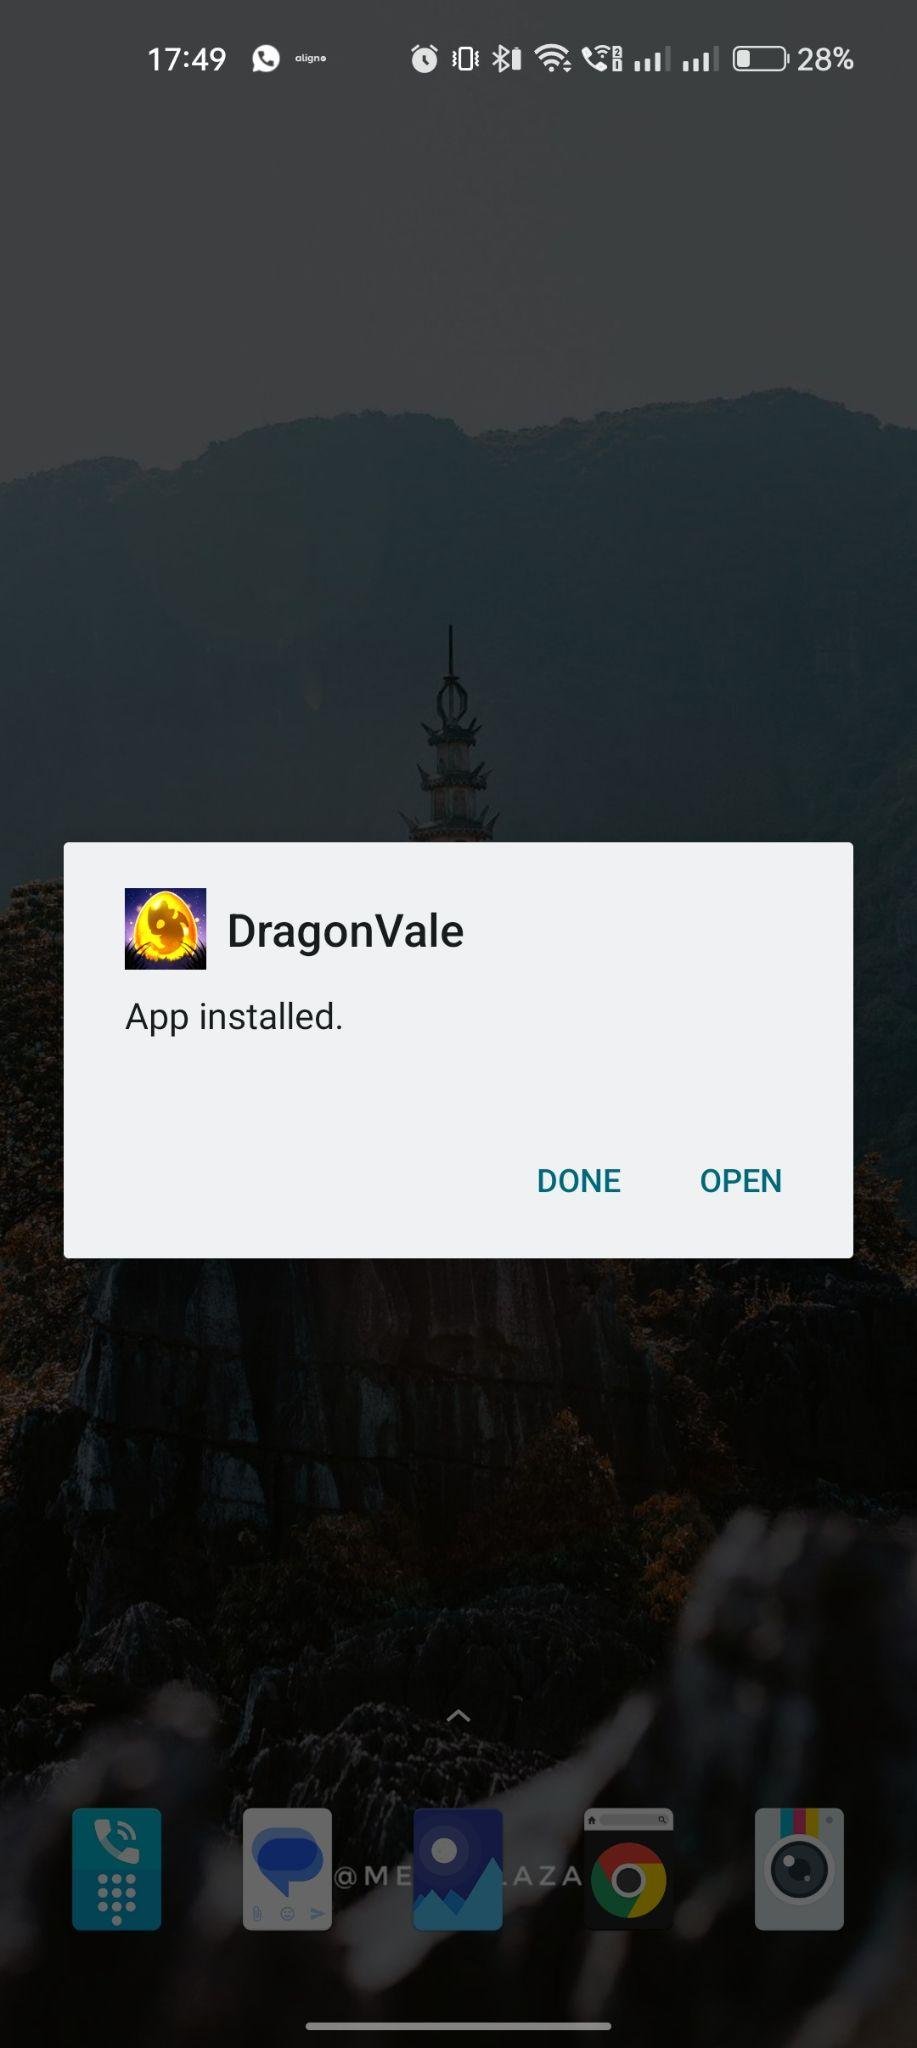 DragonVale apk installed